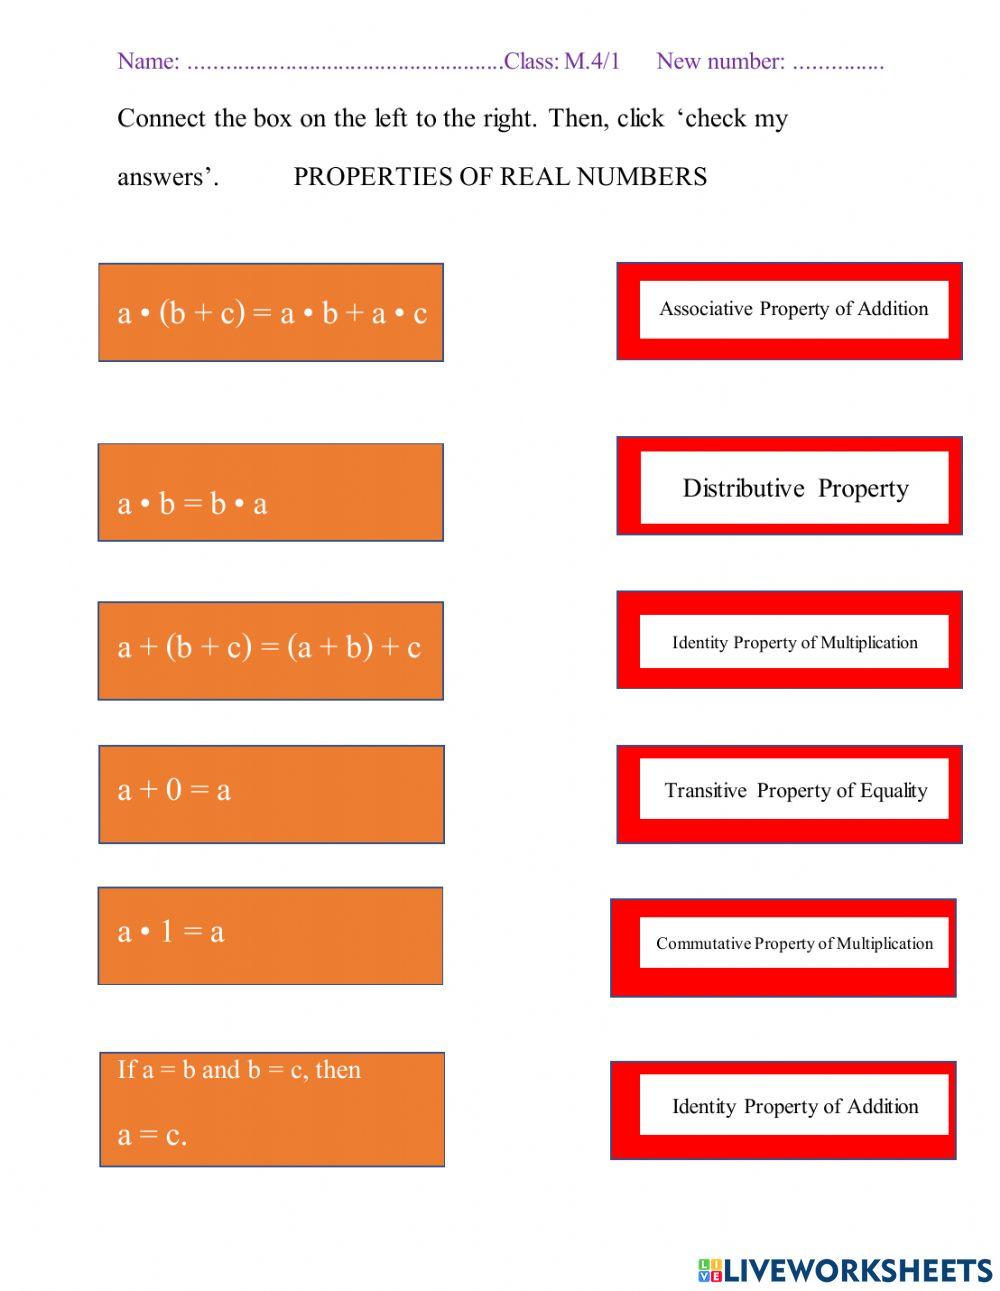 Properties of real numbers